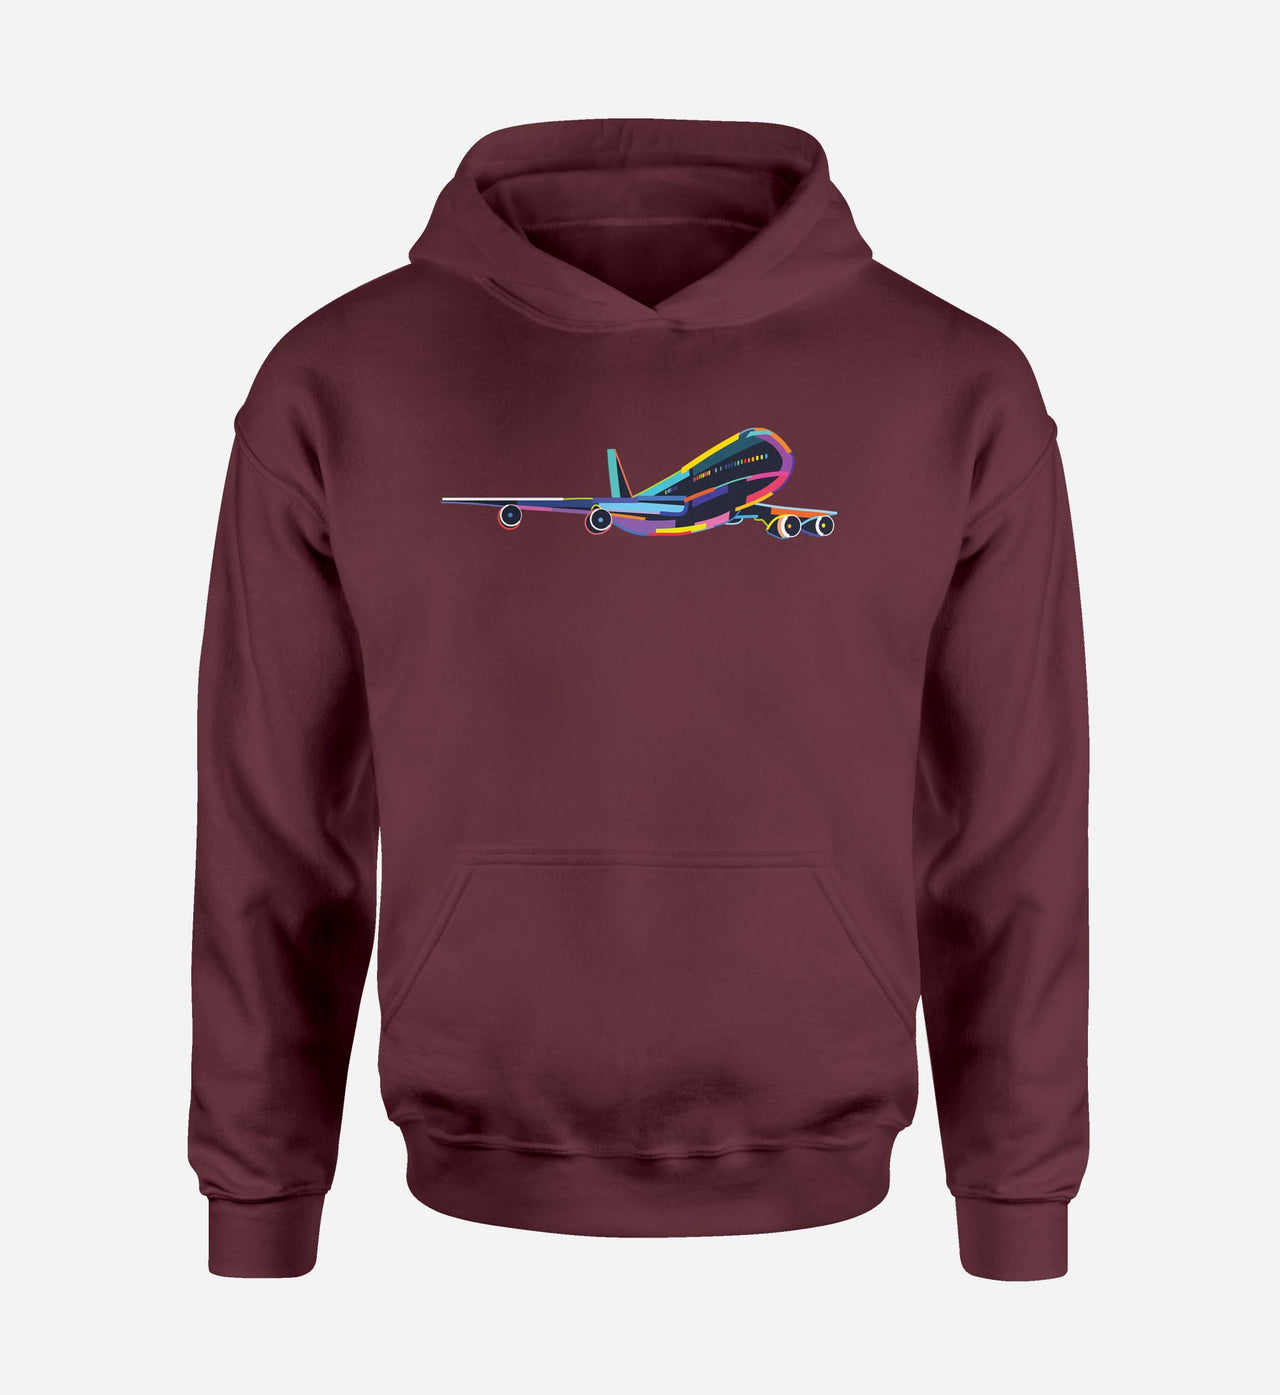 Multicolor Airplane Designed Hoodies